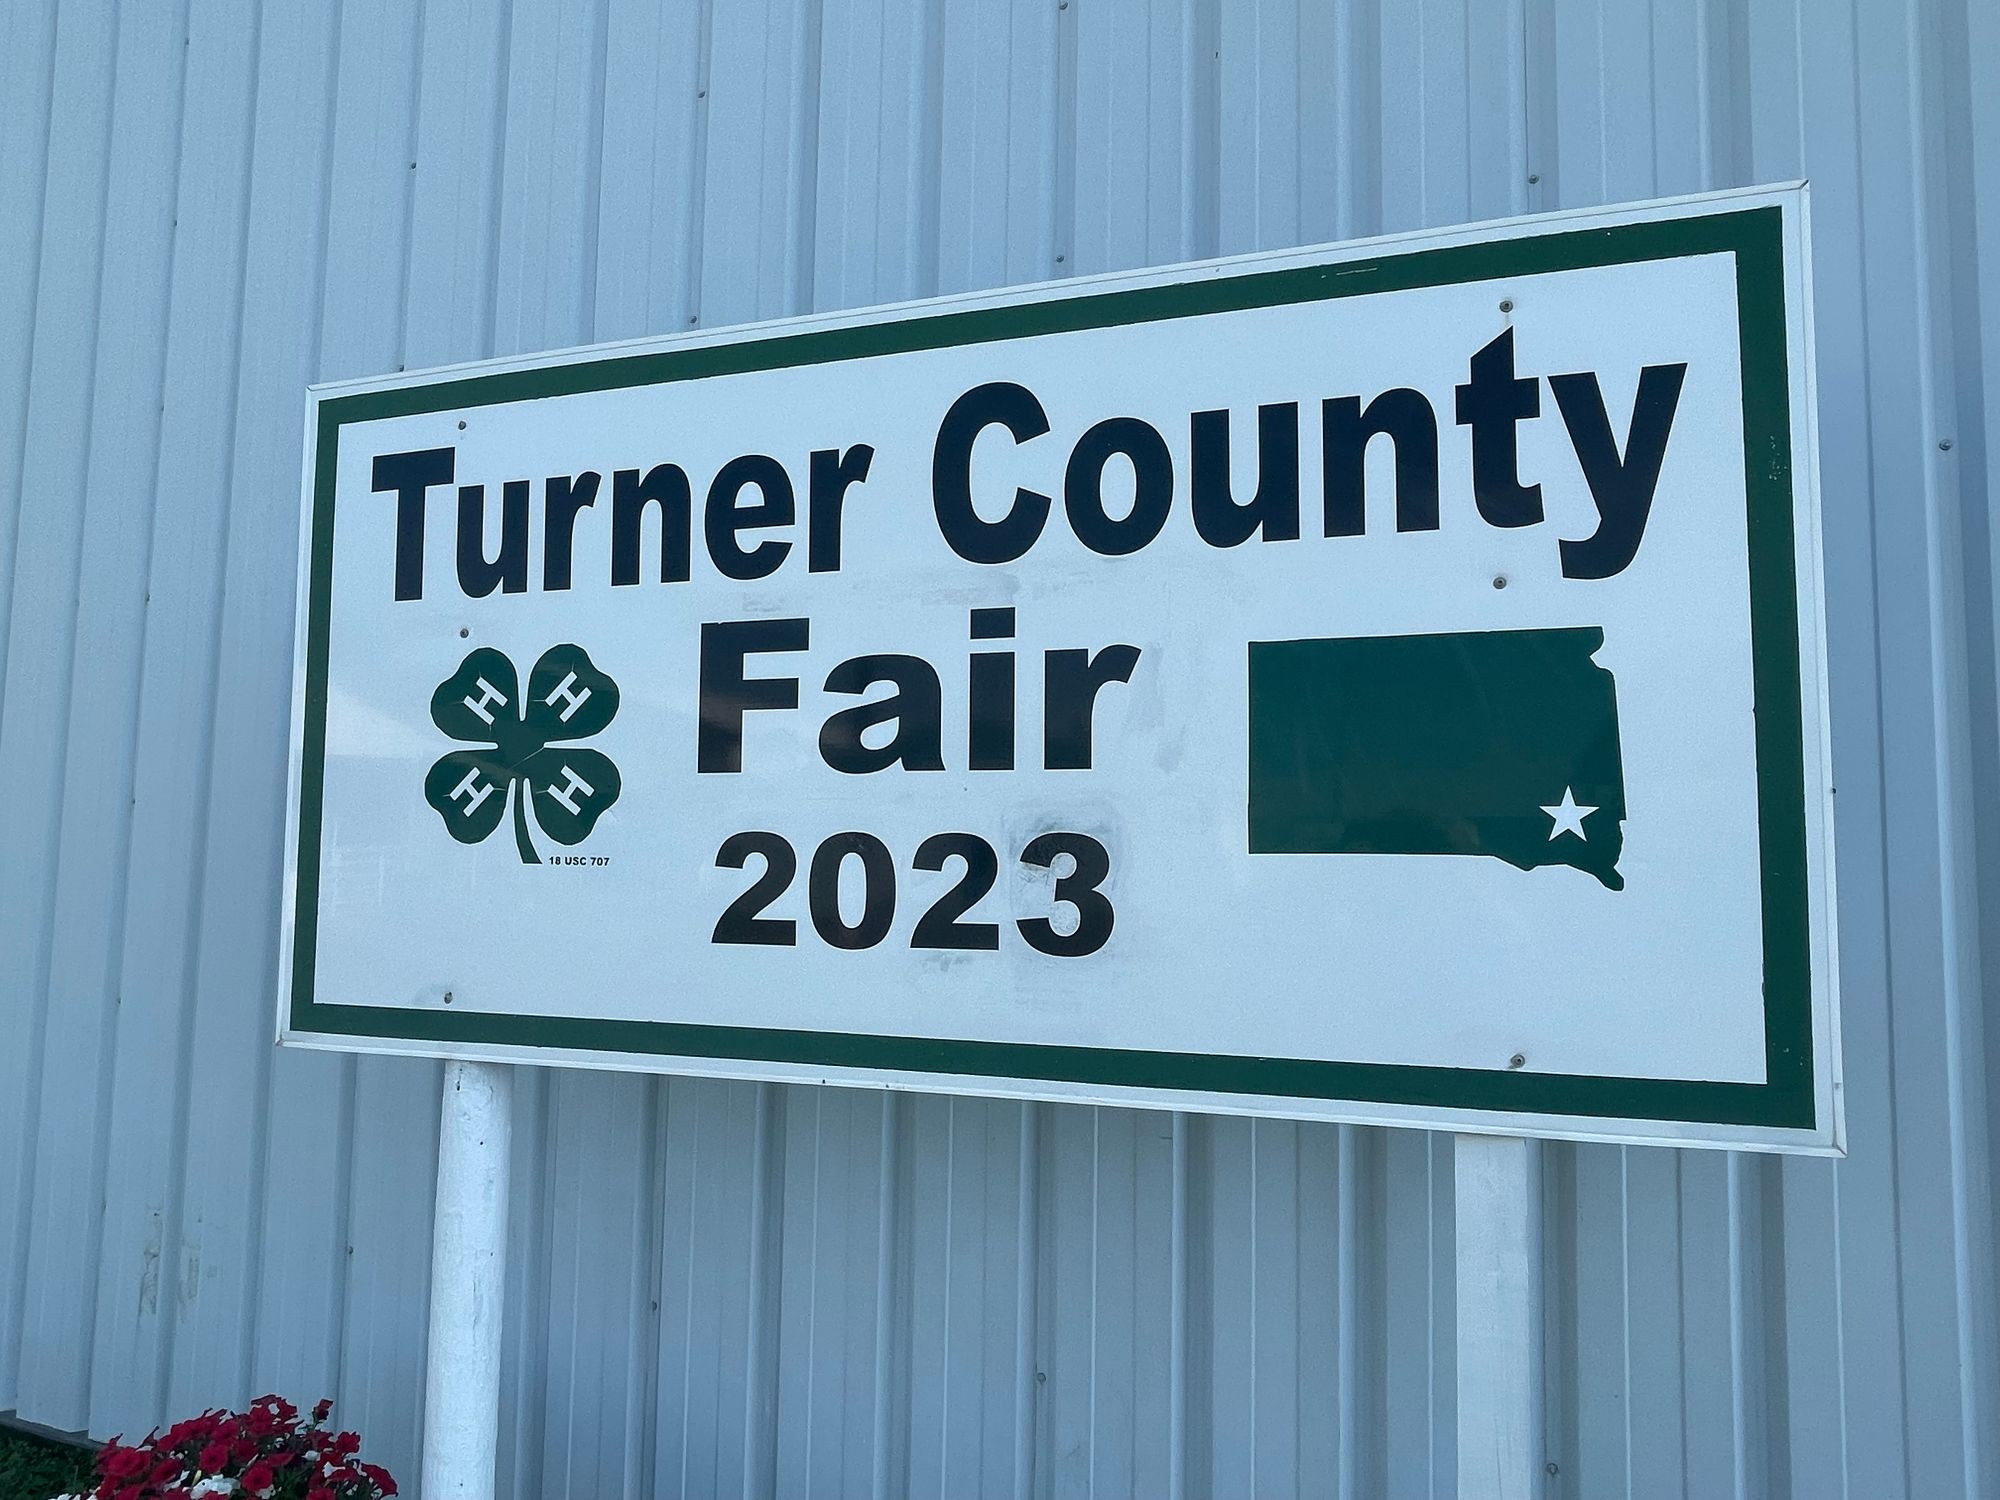 Turner County Fair sign